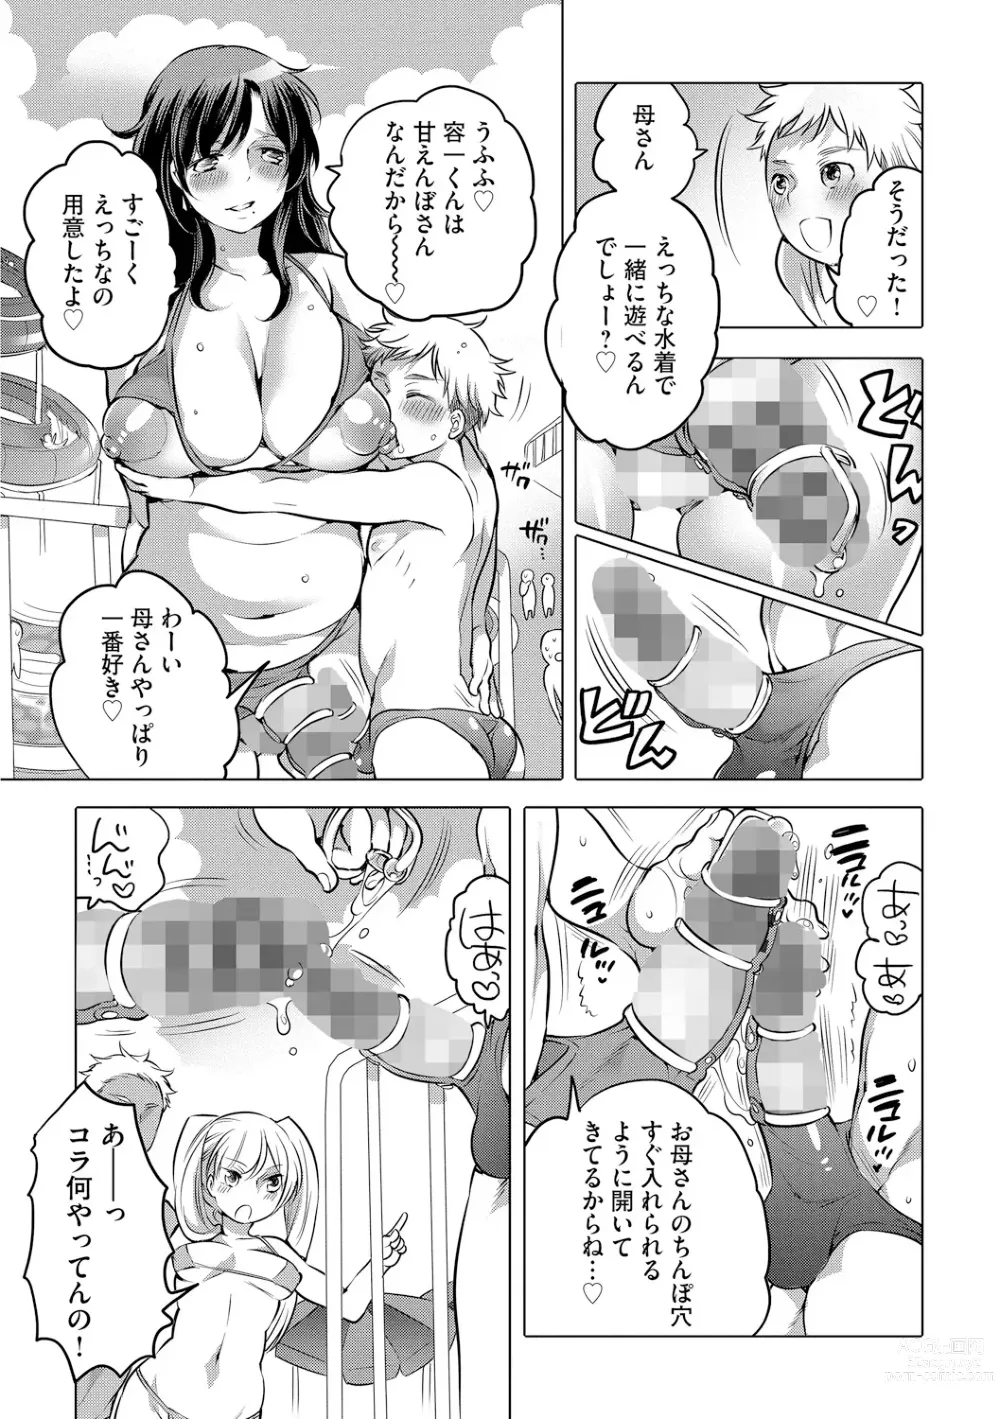 Page 187 of manga Futanari Onee-chan wa Bokura no Omocha  - FUTANARI SISTER IS OUR TOYS